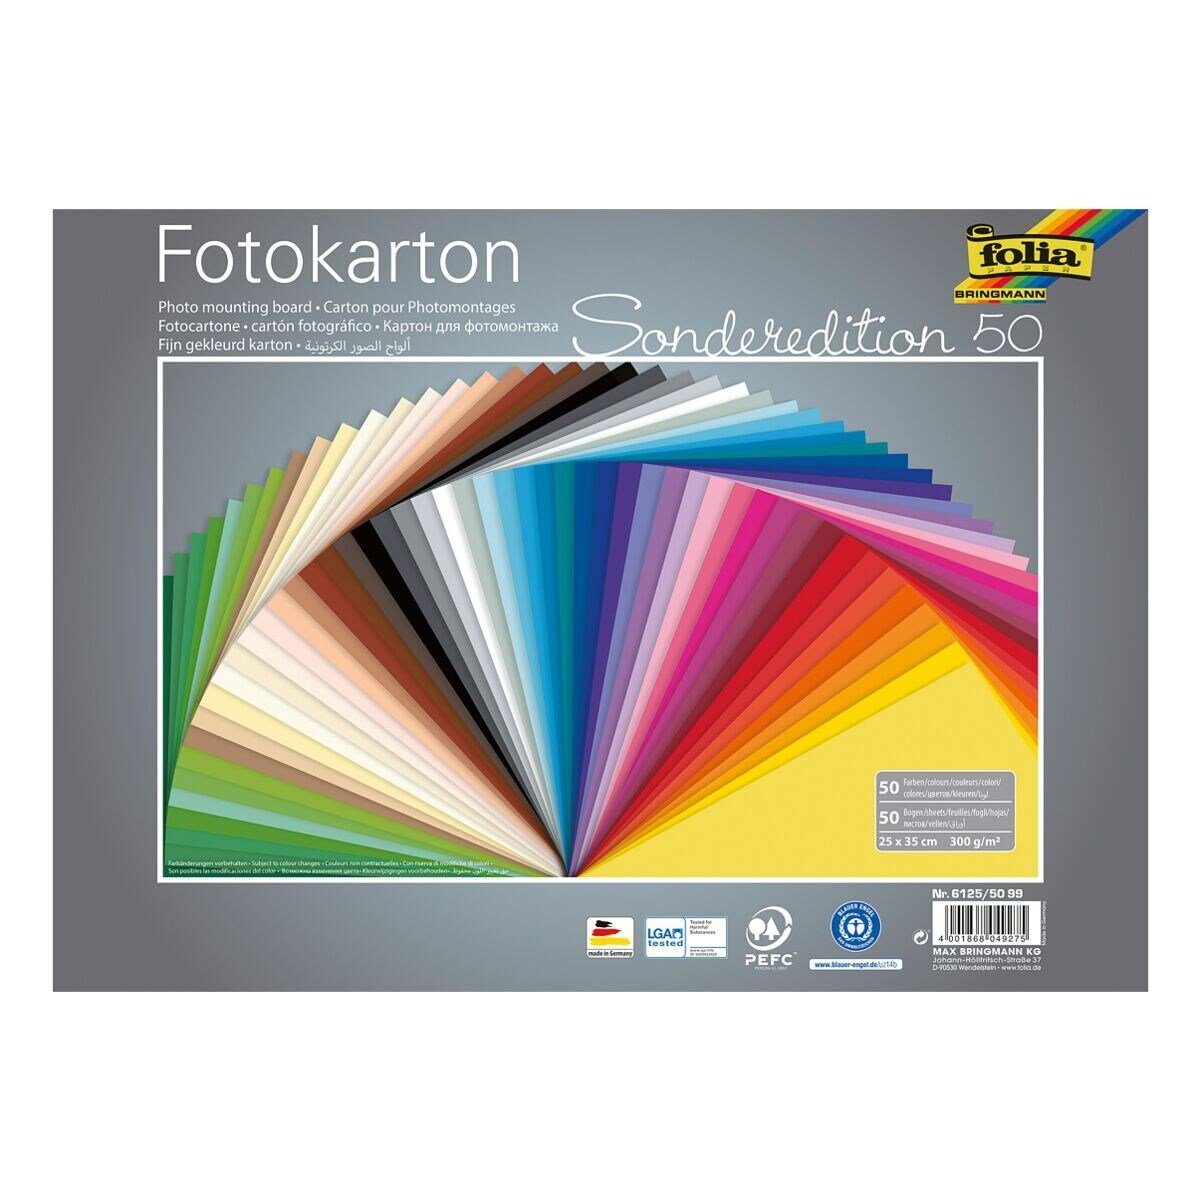 Blatt Bastelkartonpapier 50, Farben, Fotokarton Folia 50 cm, 25x35 50 300 g/m², Sonderedition